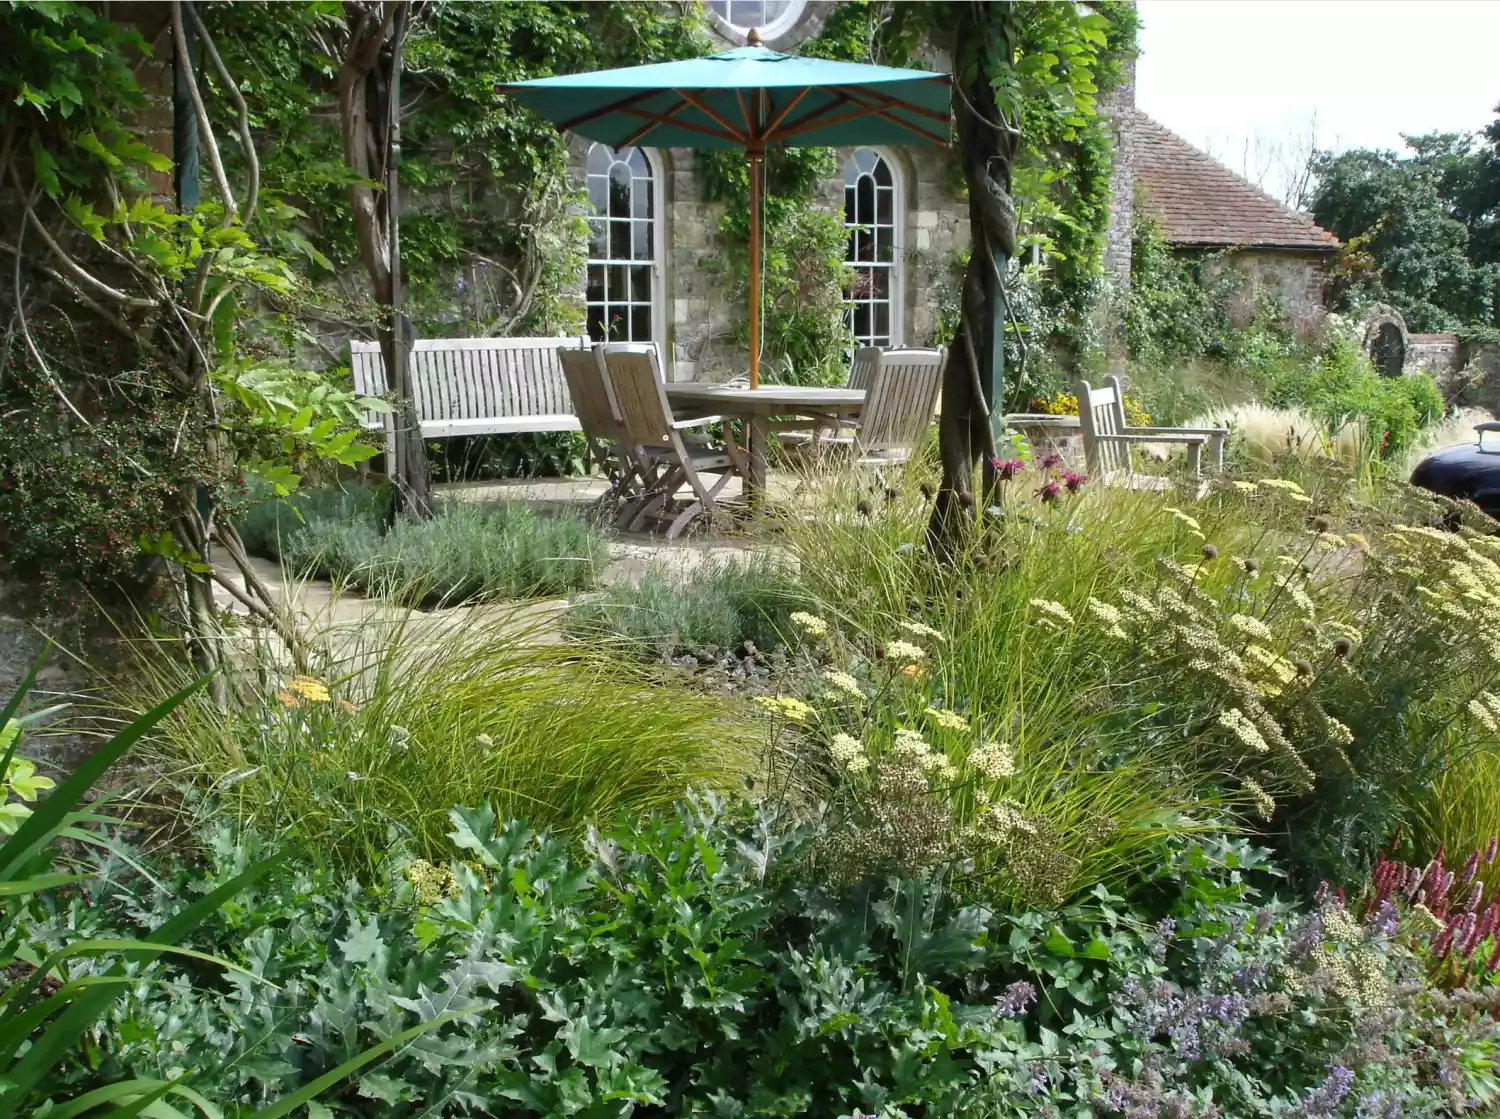 Where can one use the English garden design?